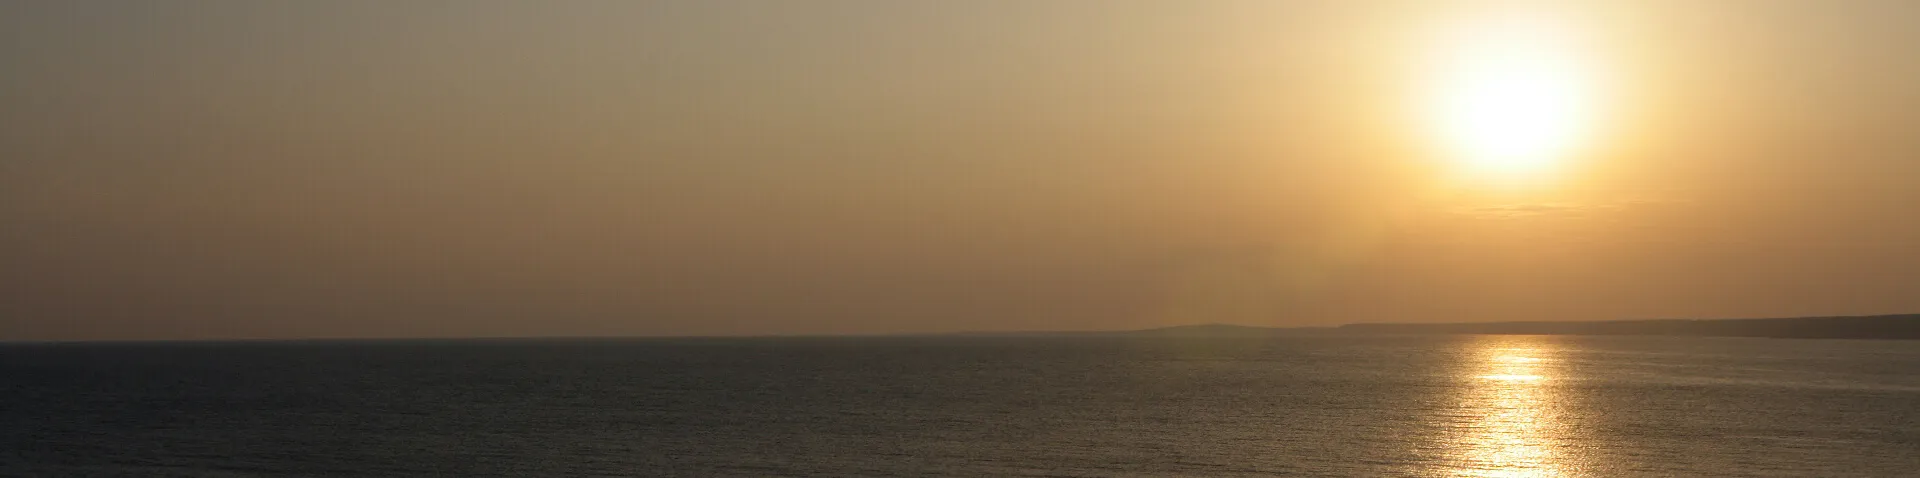 Sonnenuntergang am Horizont des Meeres